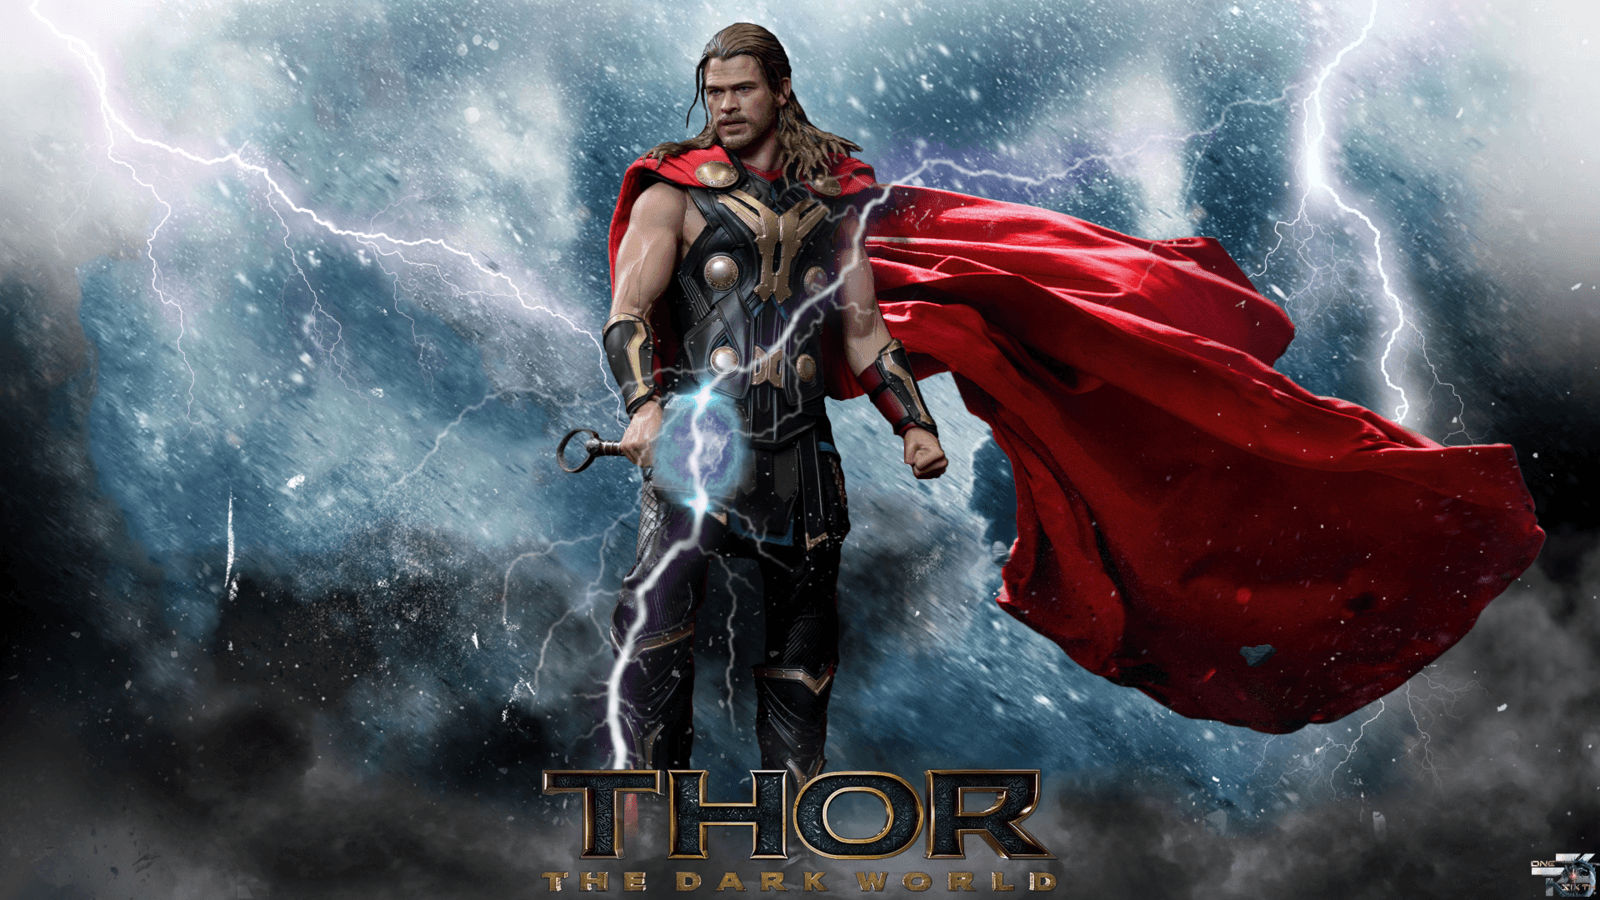 Thor The Dark World Wallpaper, 40 Desktop Image of Thor The Dark